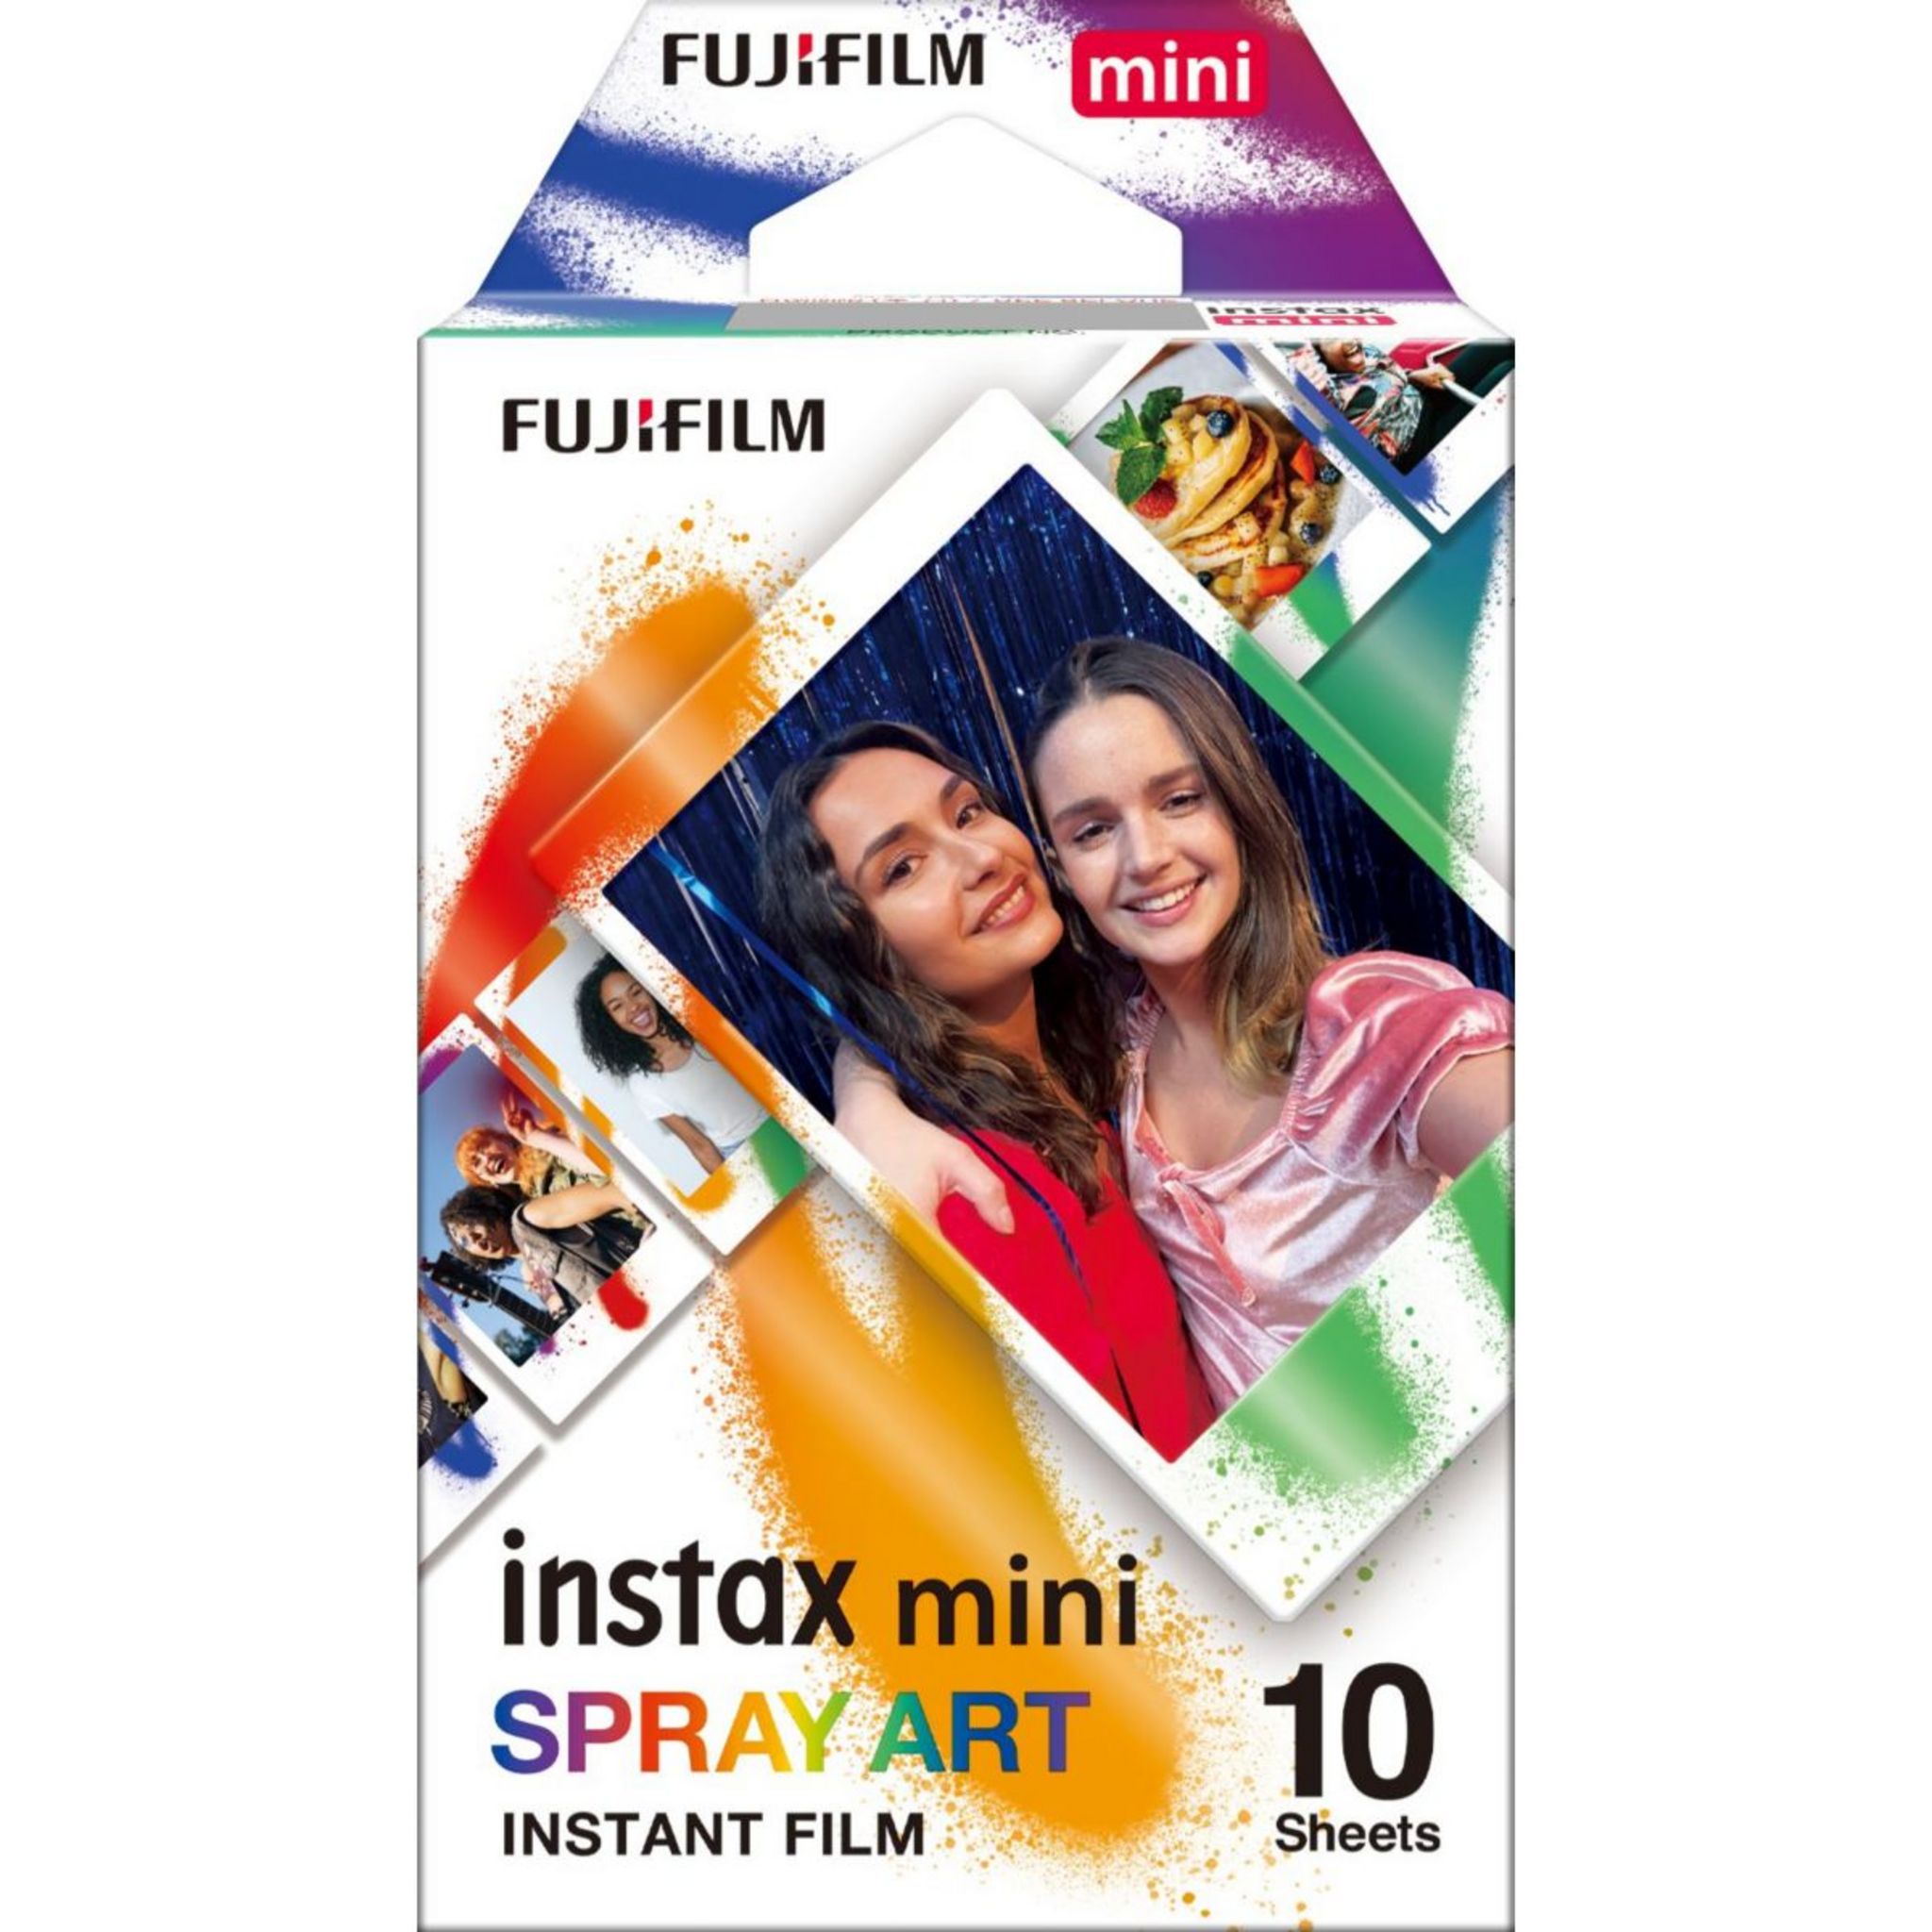 Papier photo instantané FUJIFILM Instax Wide (x20)